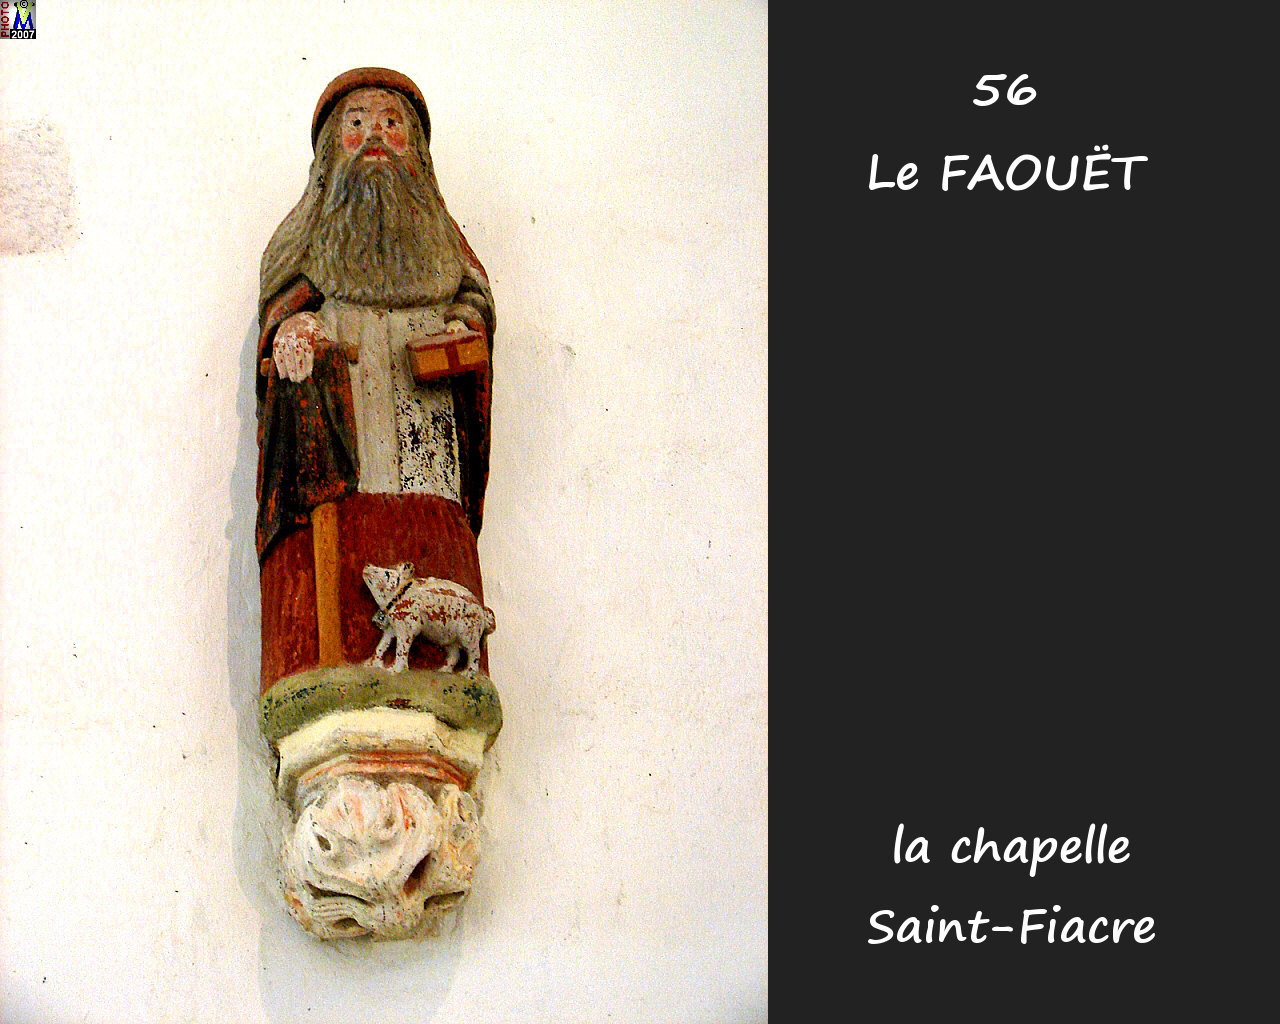 56FAOUET_chapelle-fiacre_338.jpg